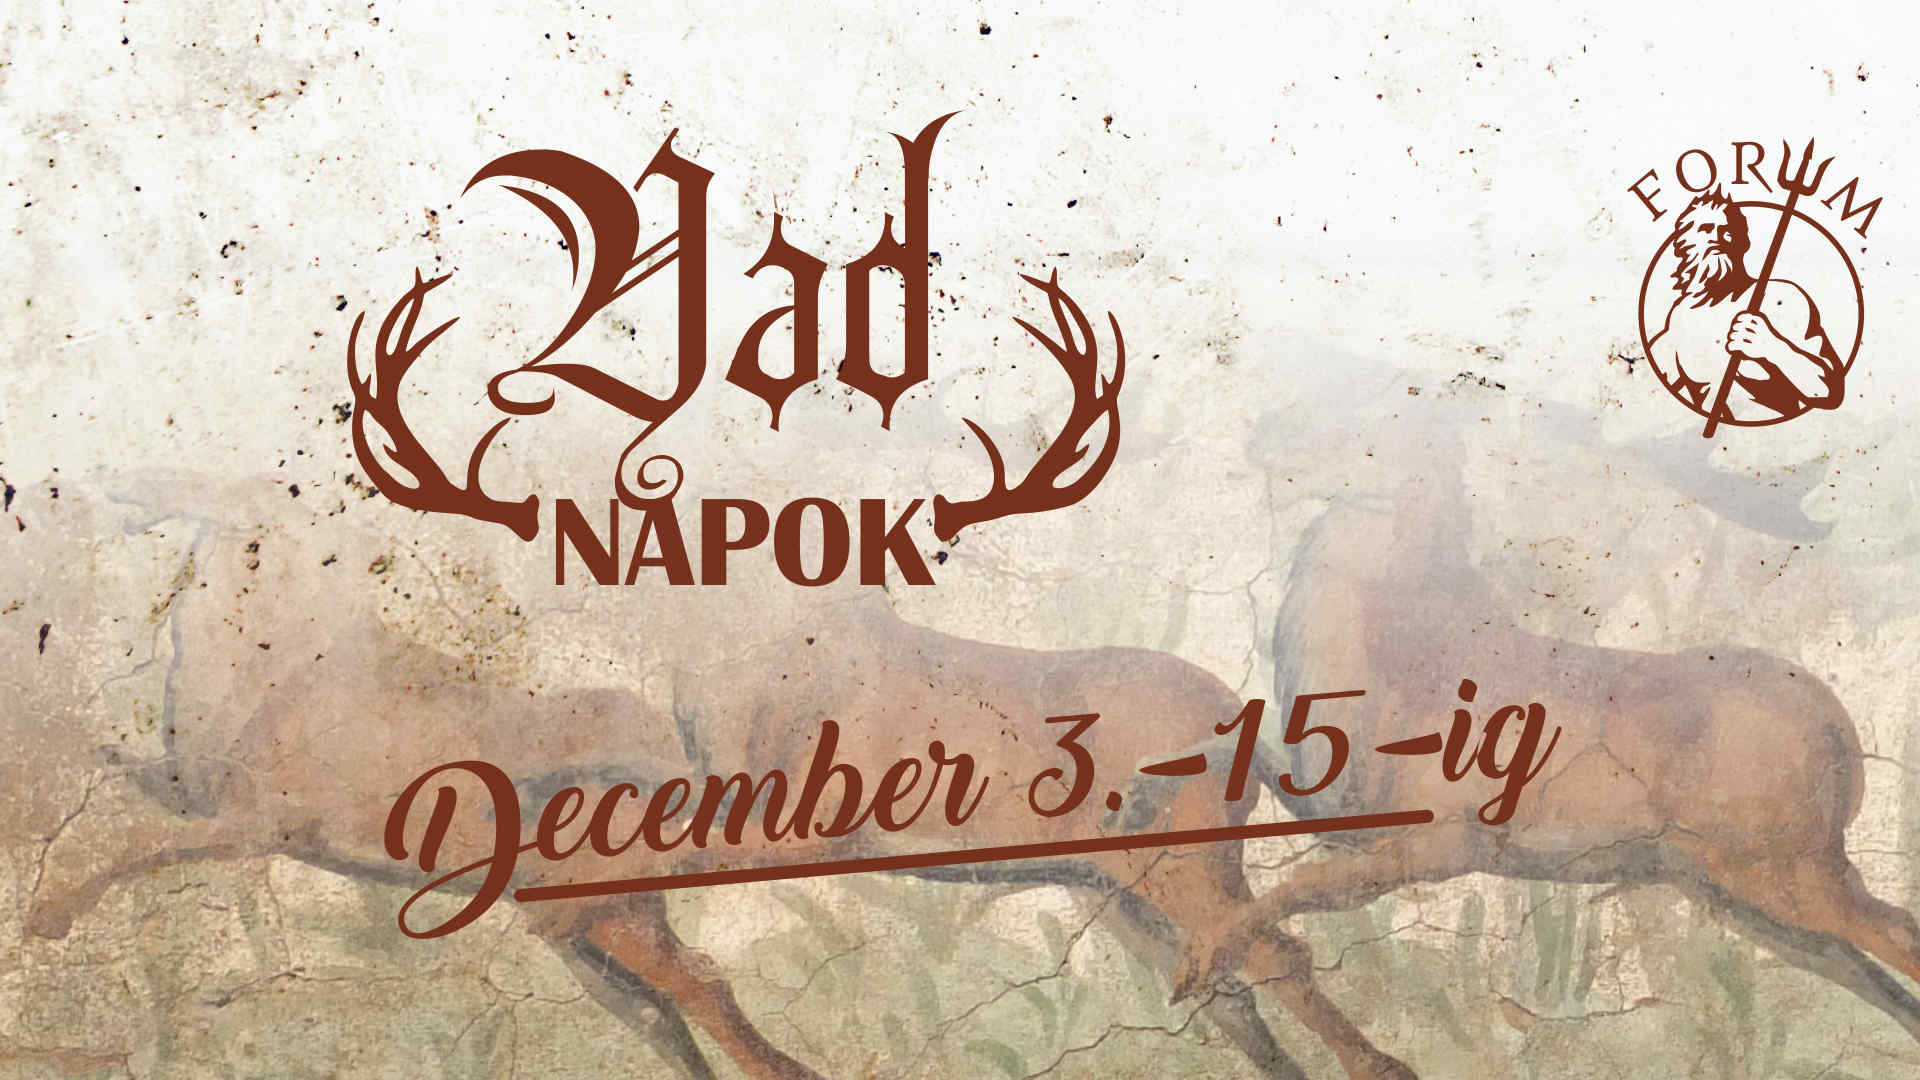 Vad napok – December 3-15.